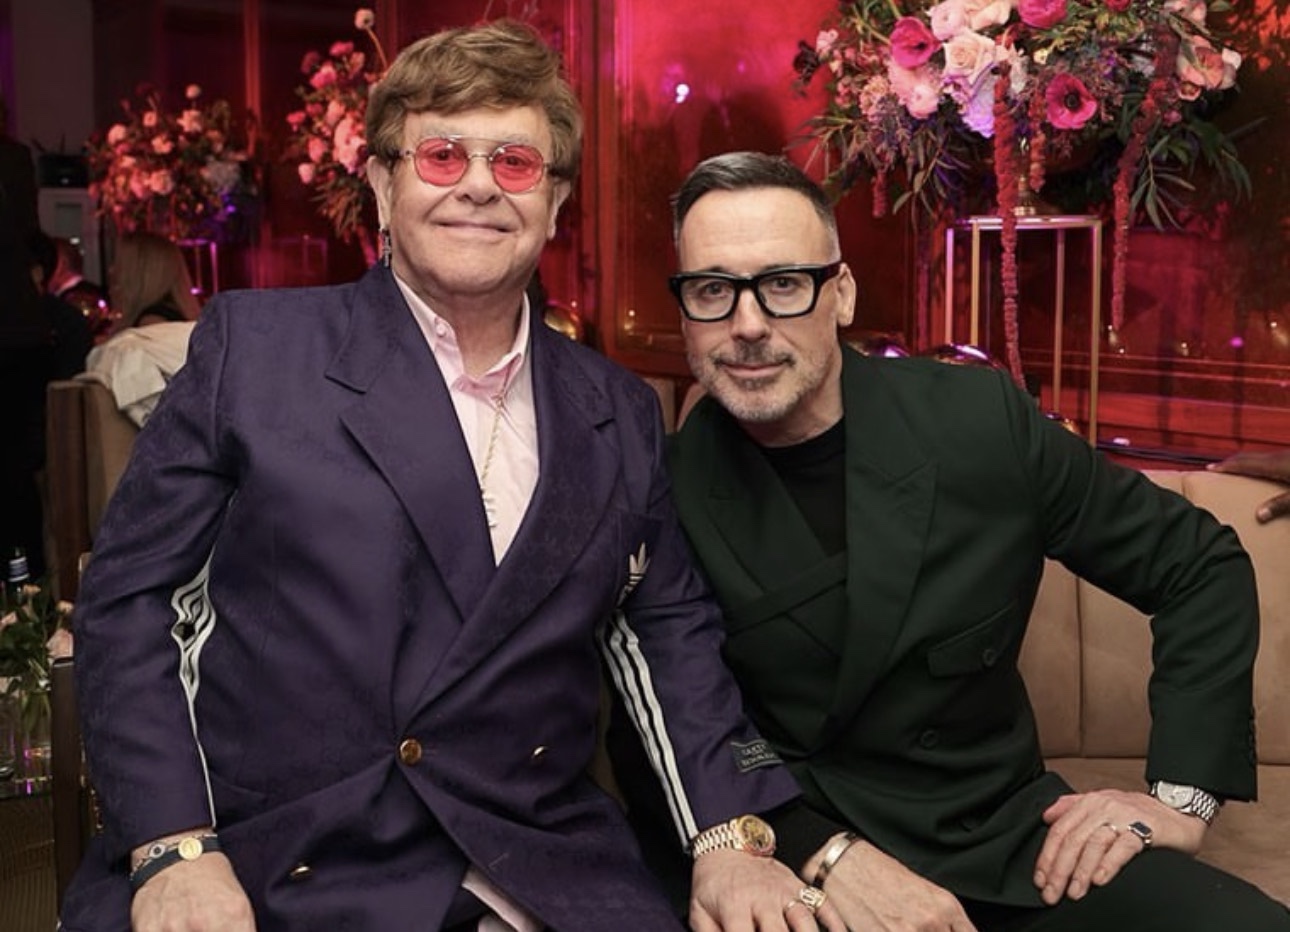 Elton John and David Furnish at the Elton John AIDS Foundation Rocket Fund launch